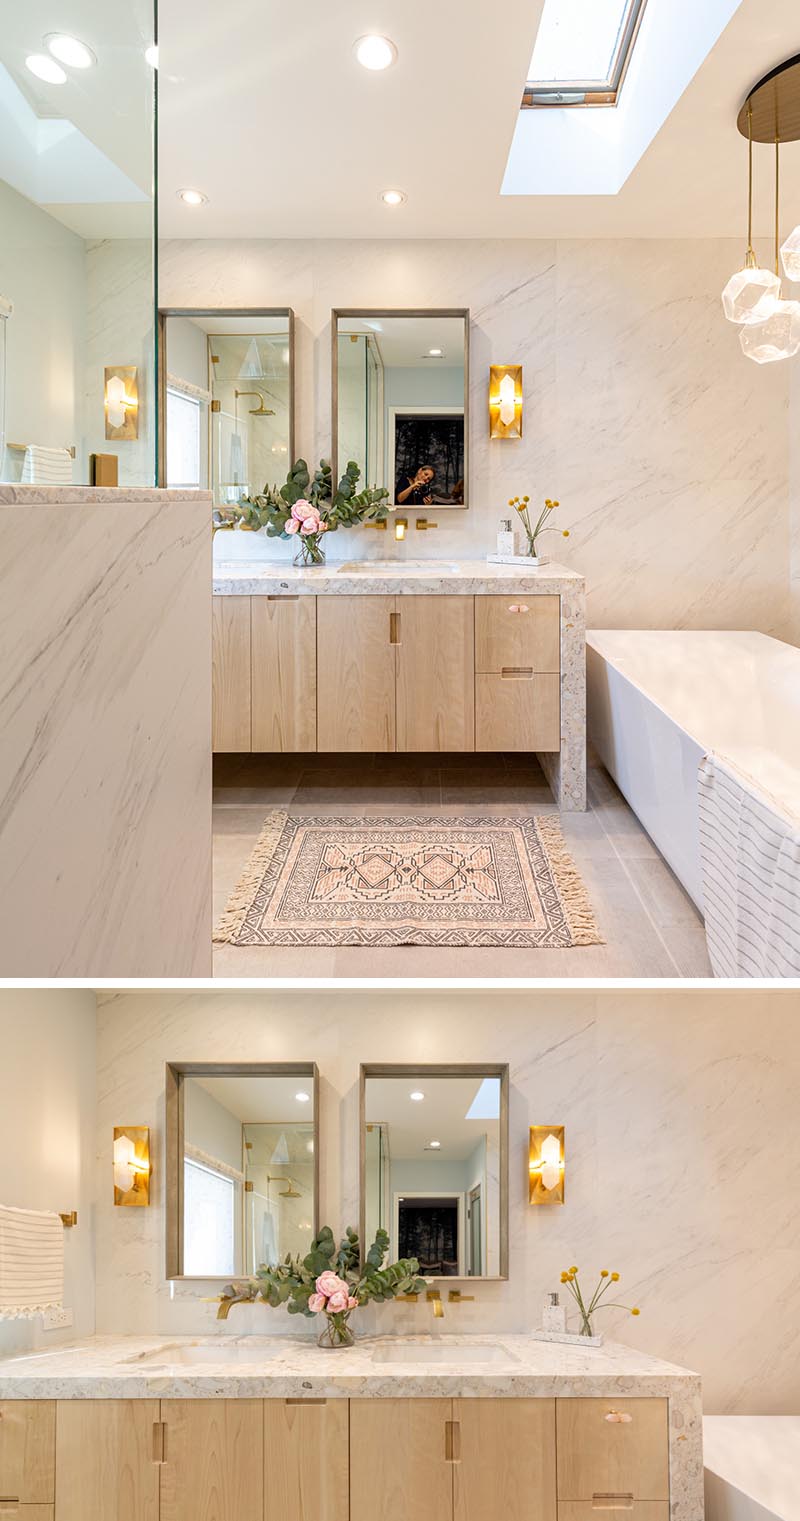 Bathroom Design Inspiration - Brass Accents Add A Glamorous